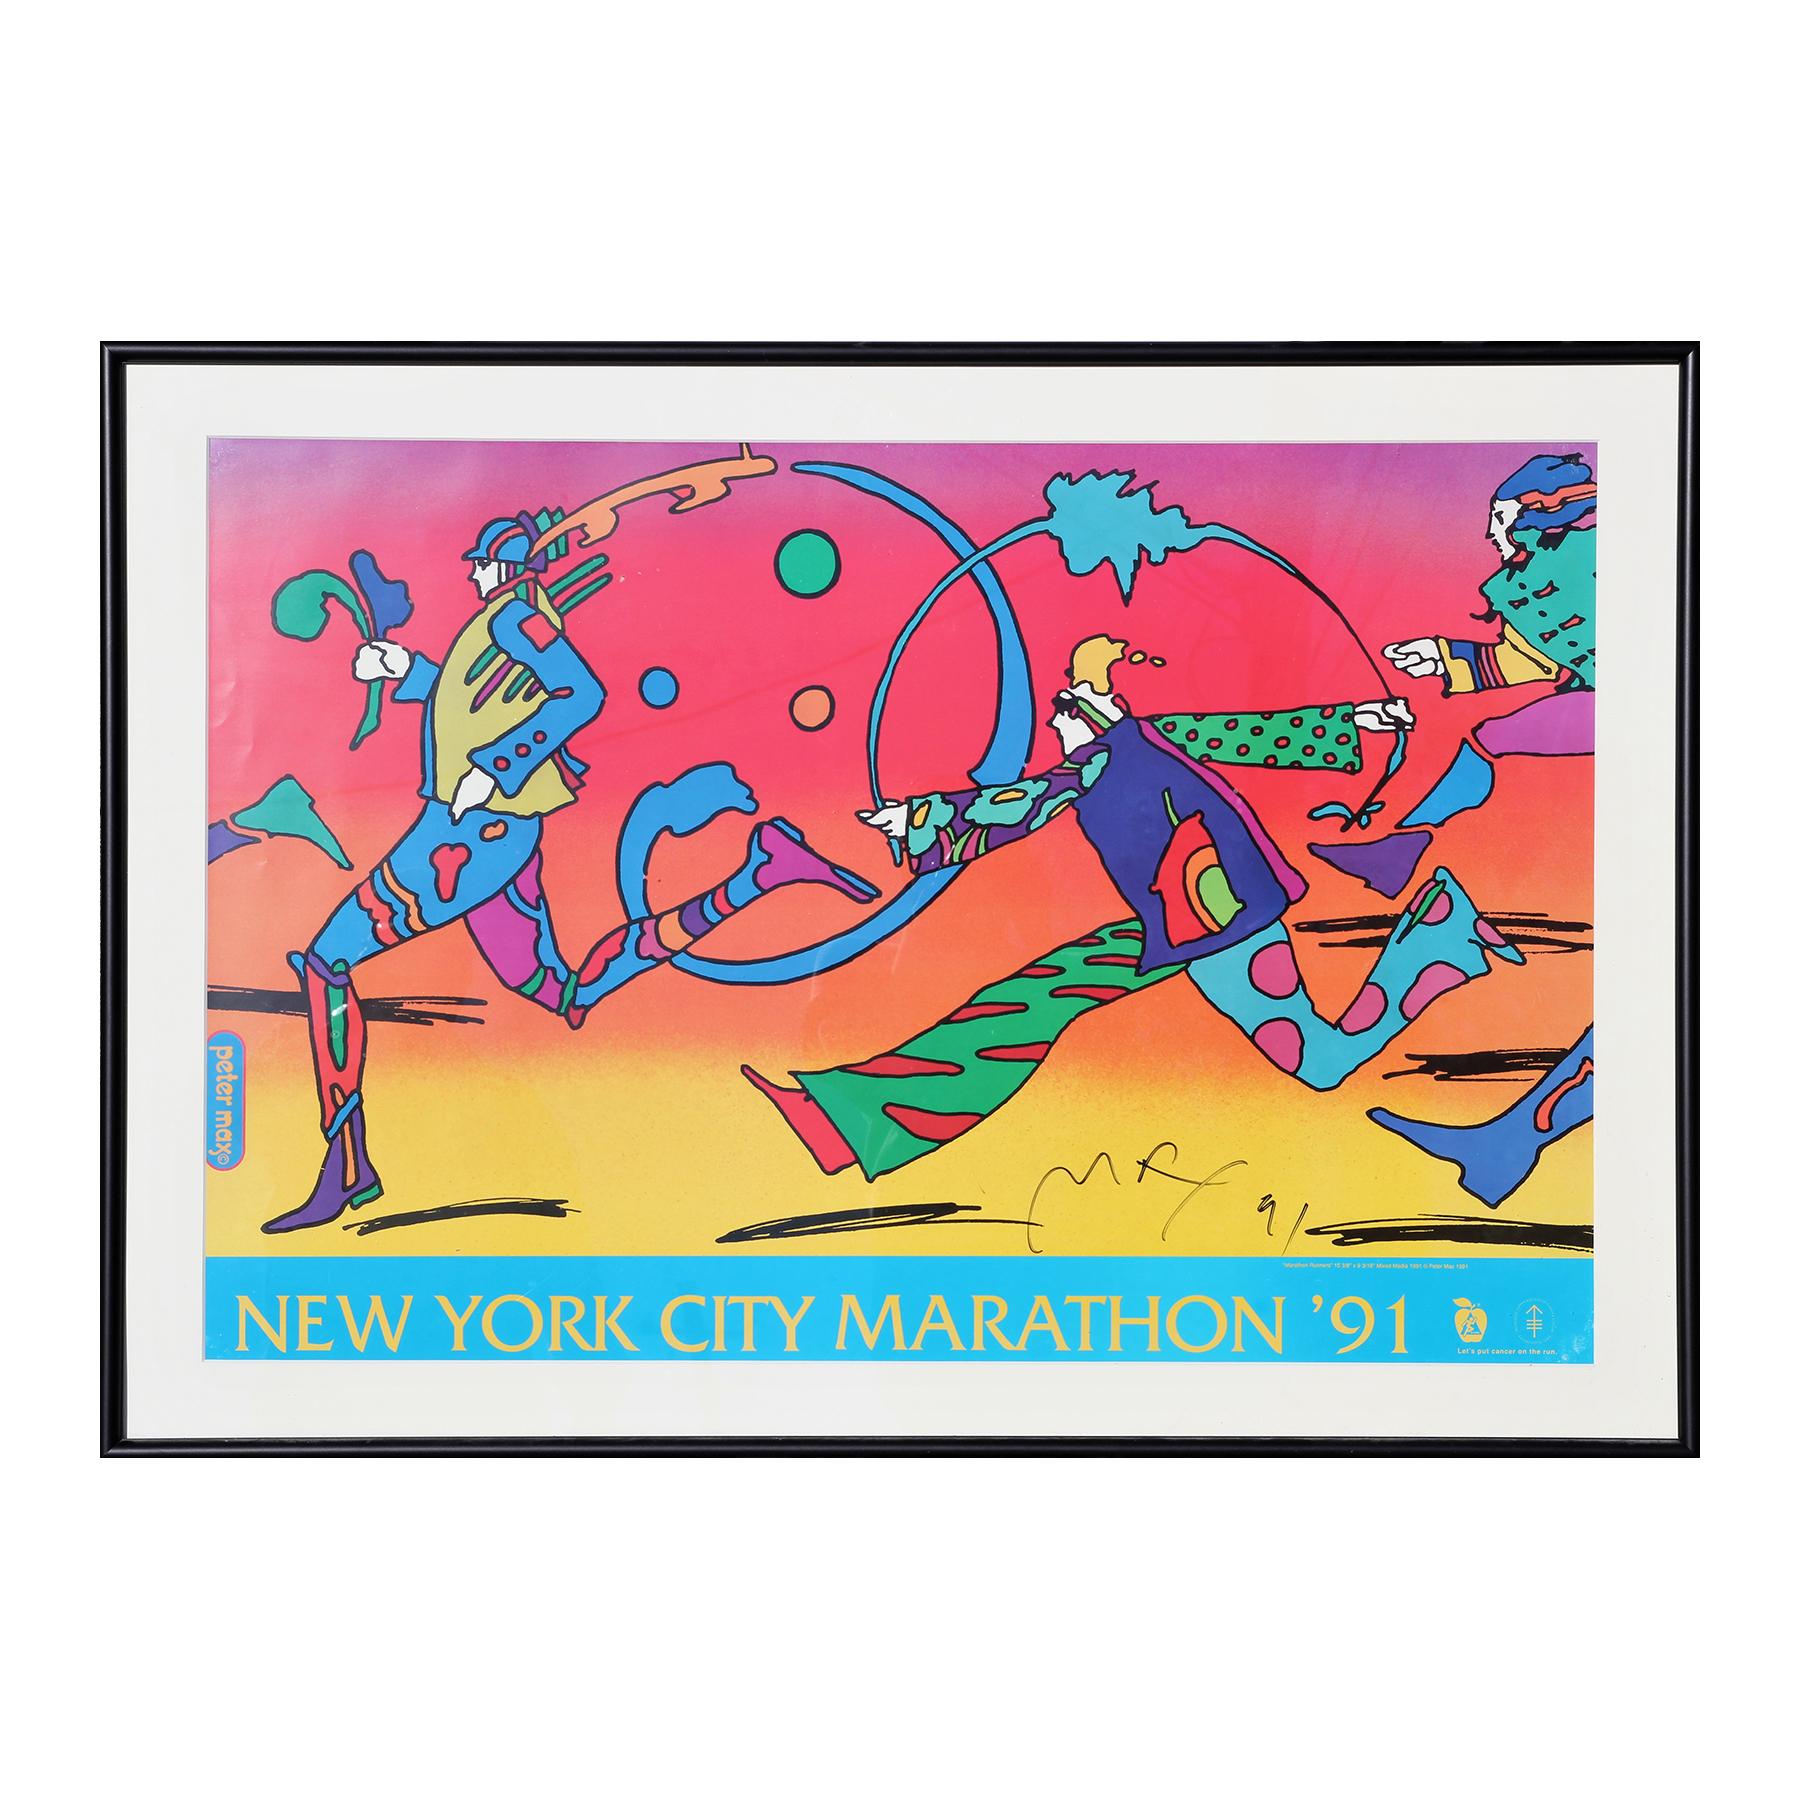 Technicolor New York City Marathon Original Poster - Print by Peter Max